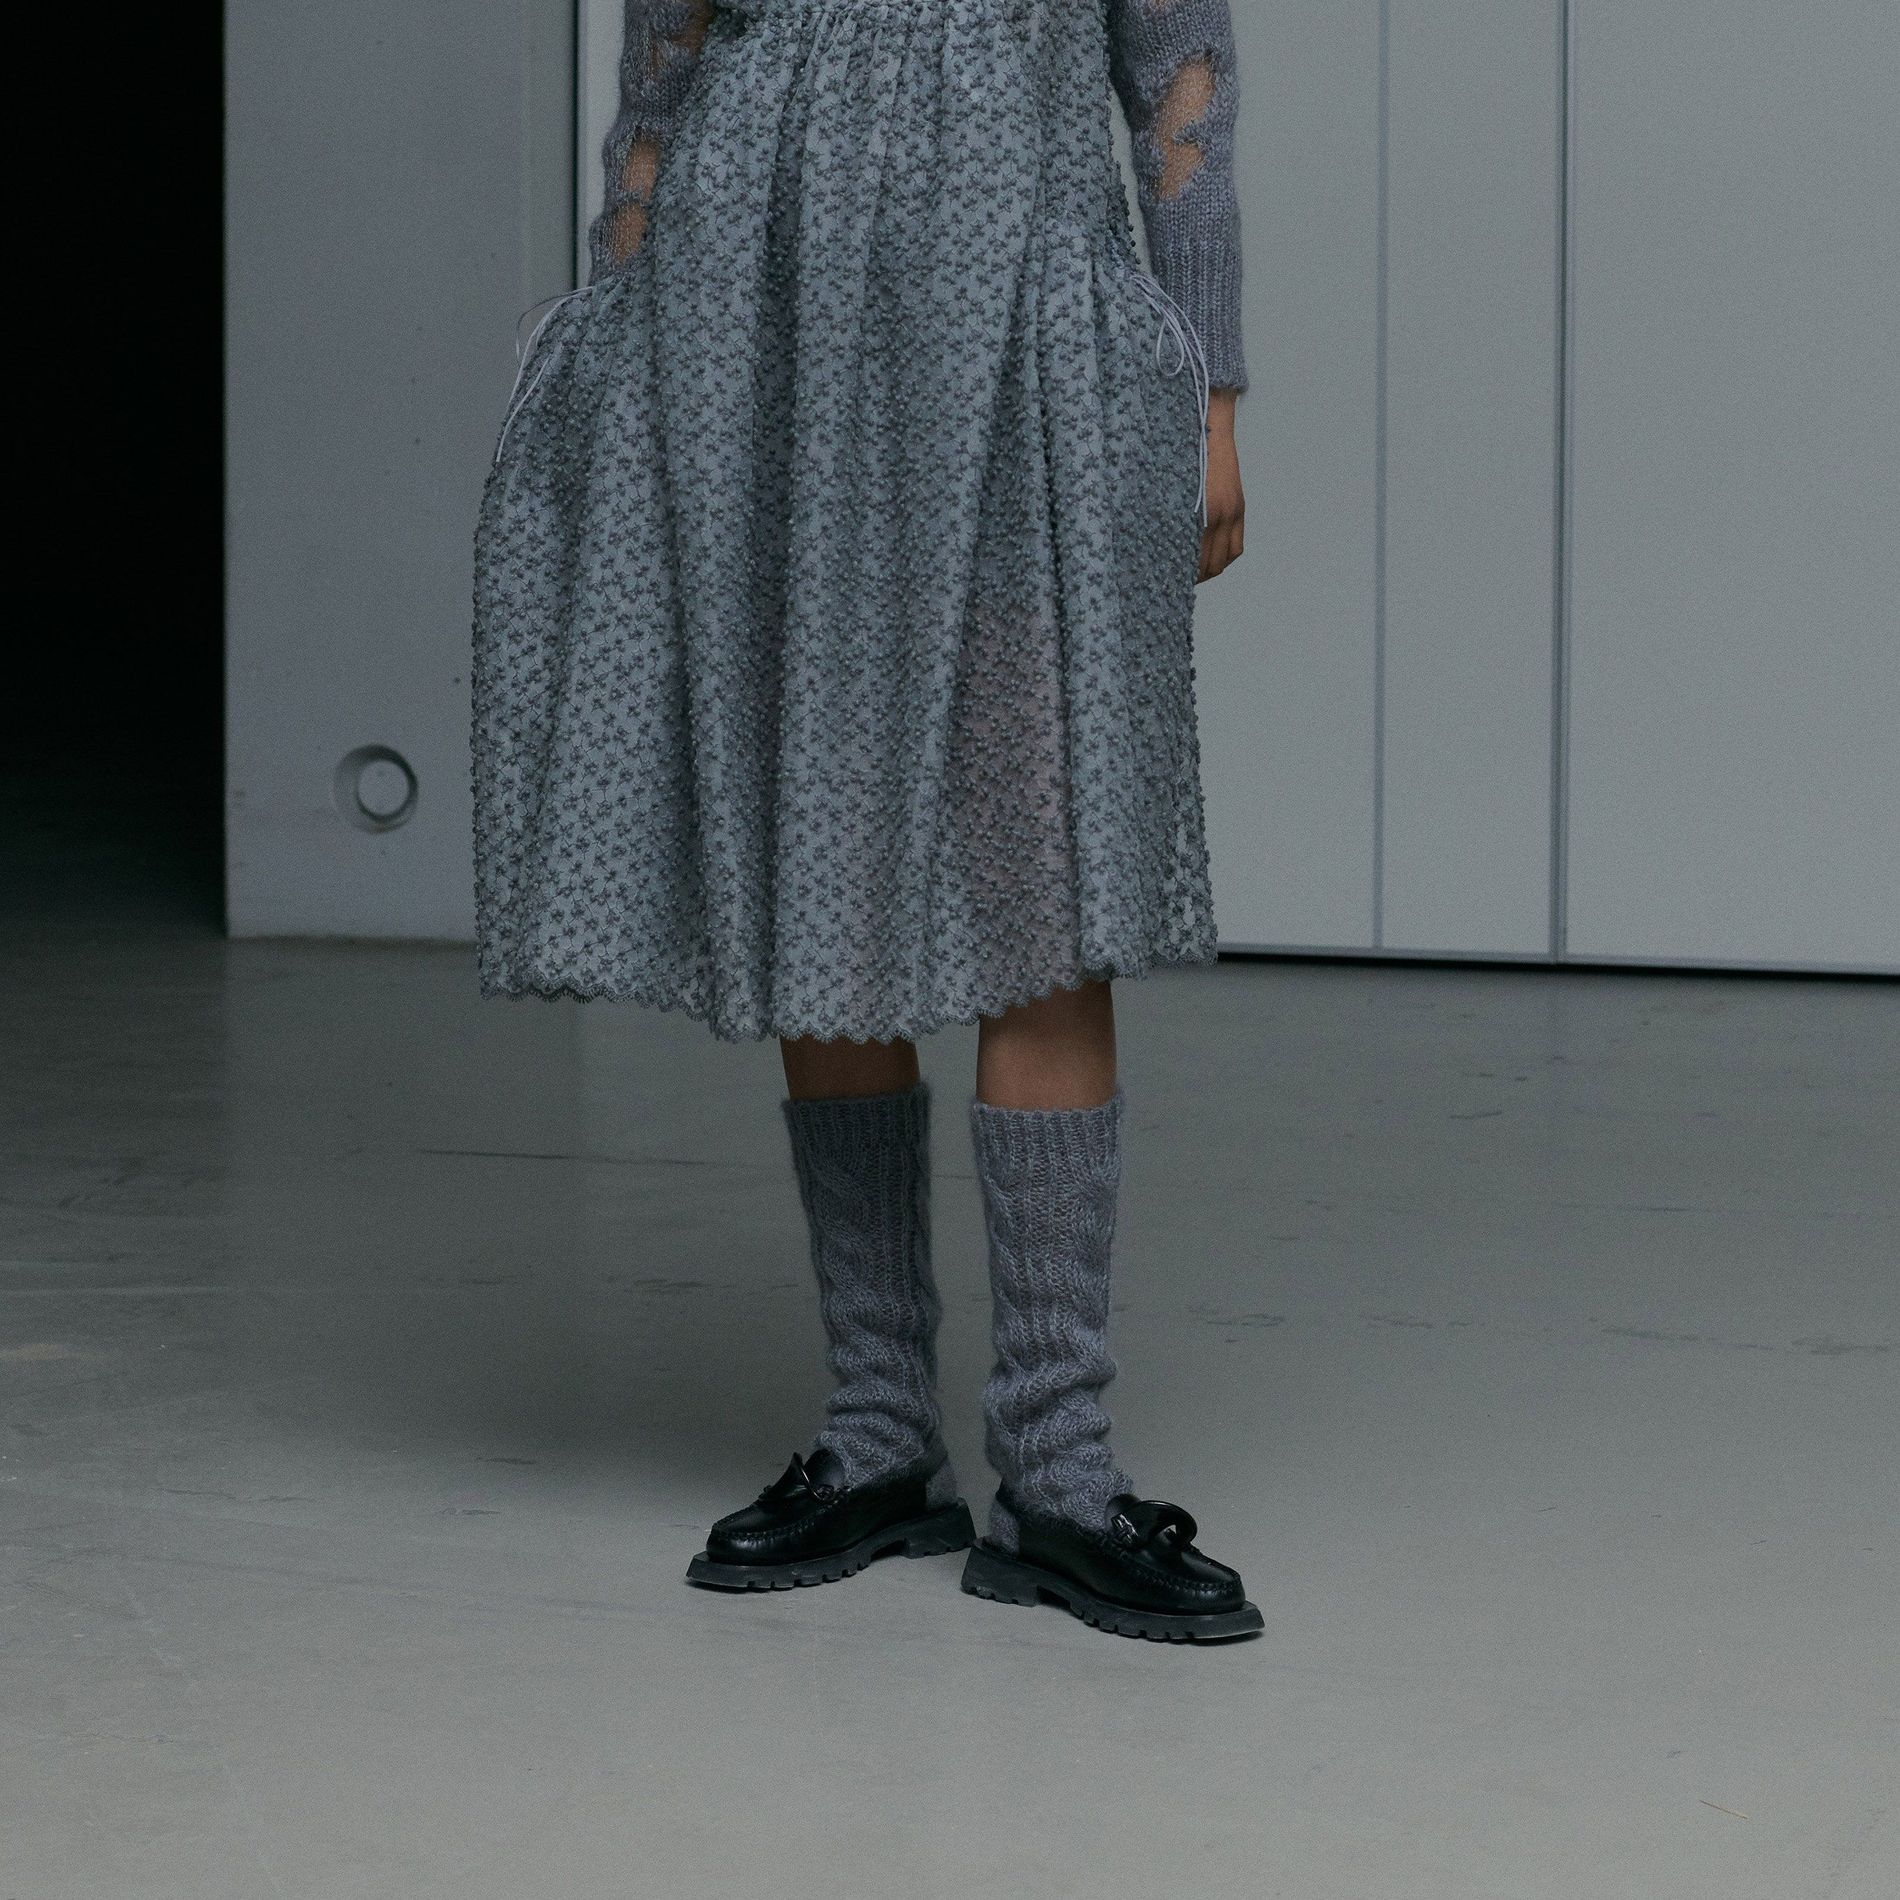 Grey Cecilie Bahnsen Autumn 2021 look with knit socks